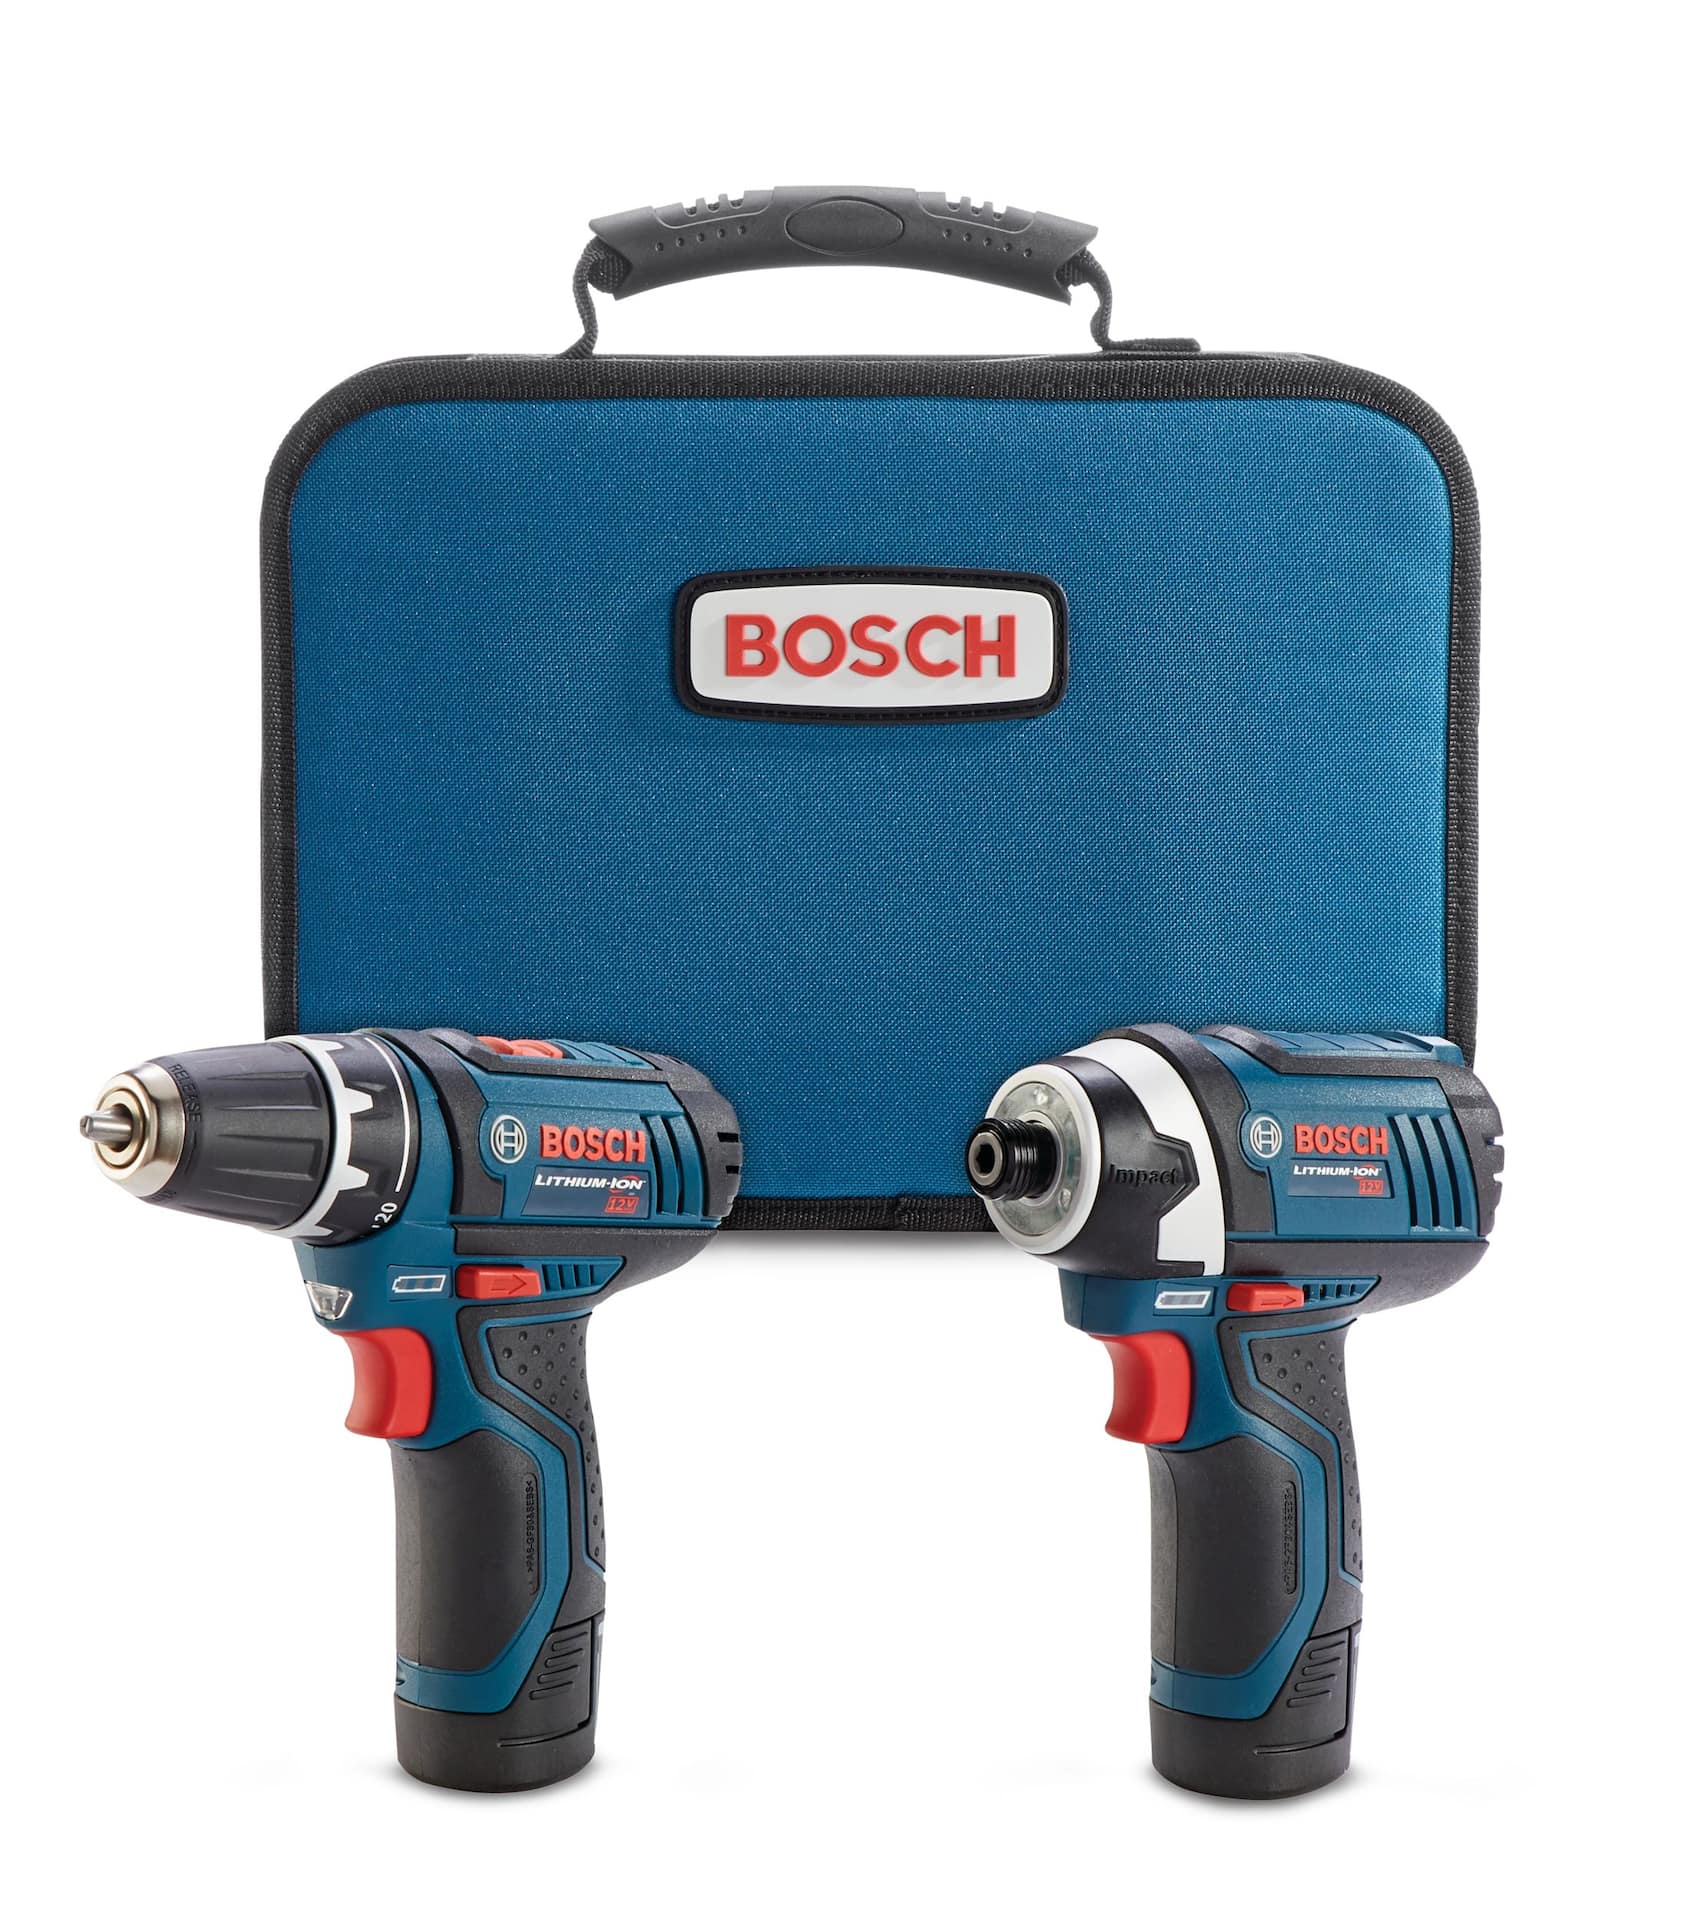 Bosch CLPK22-120 12V Max Cordless Drill/Driver, Impact Wrench